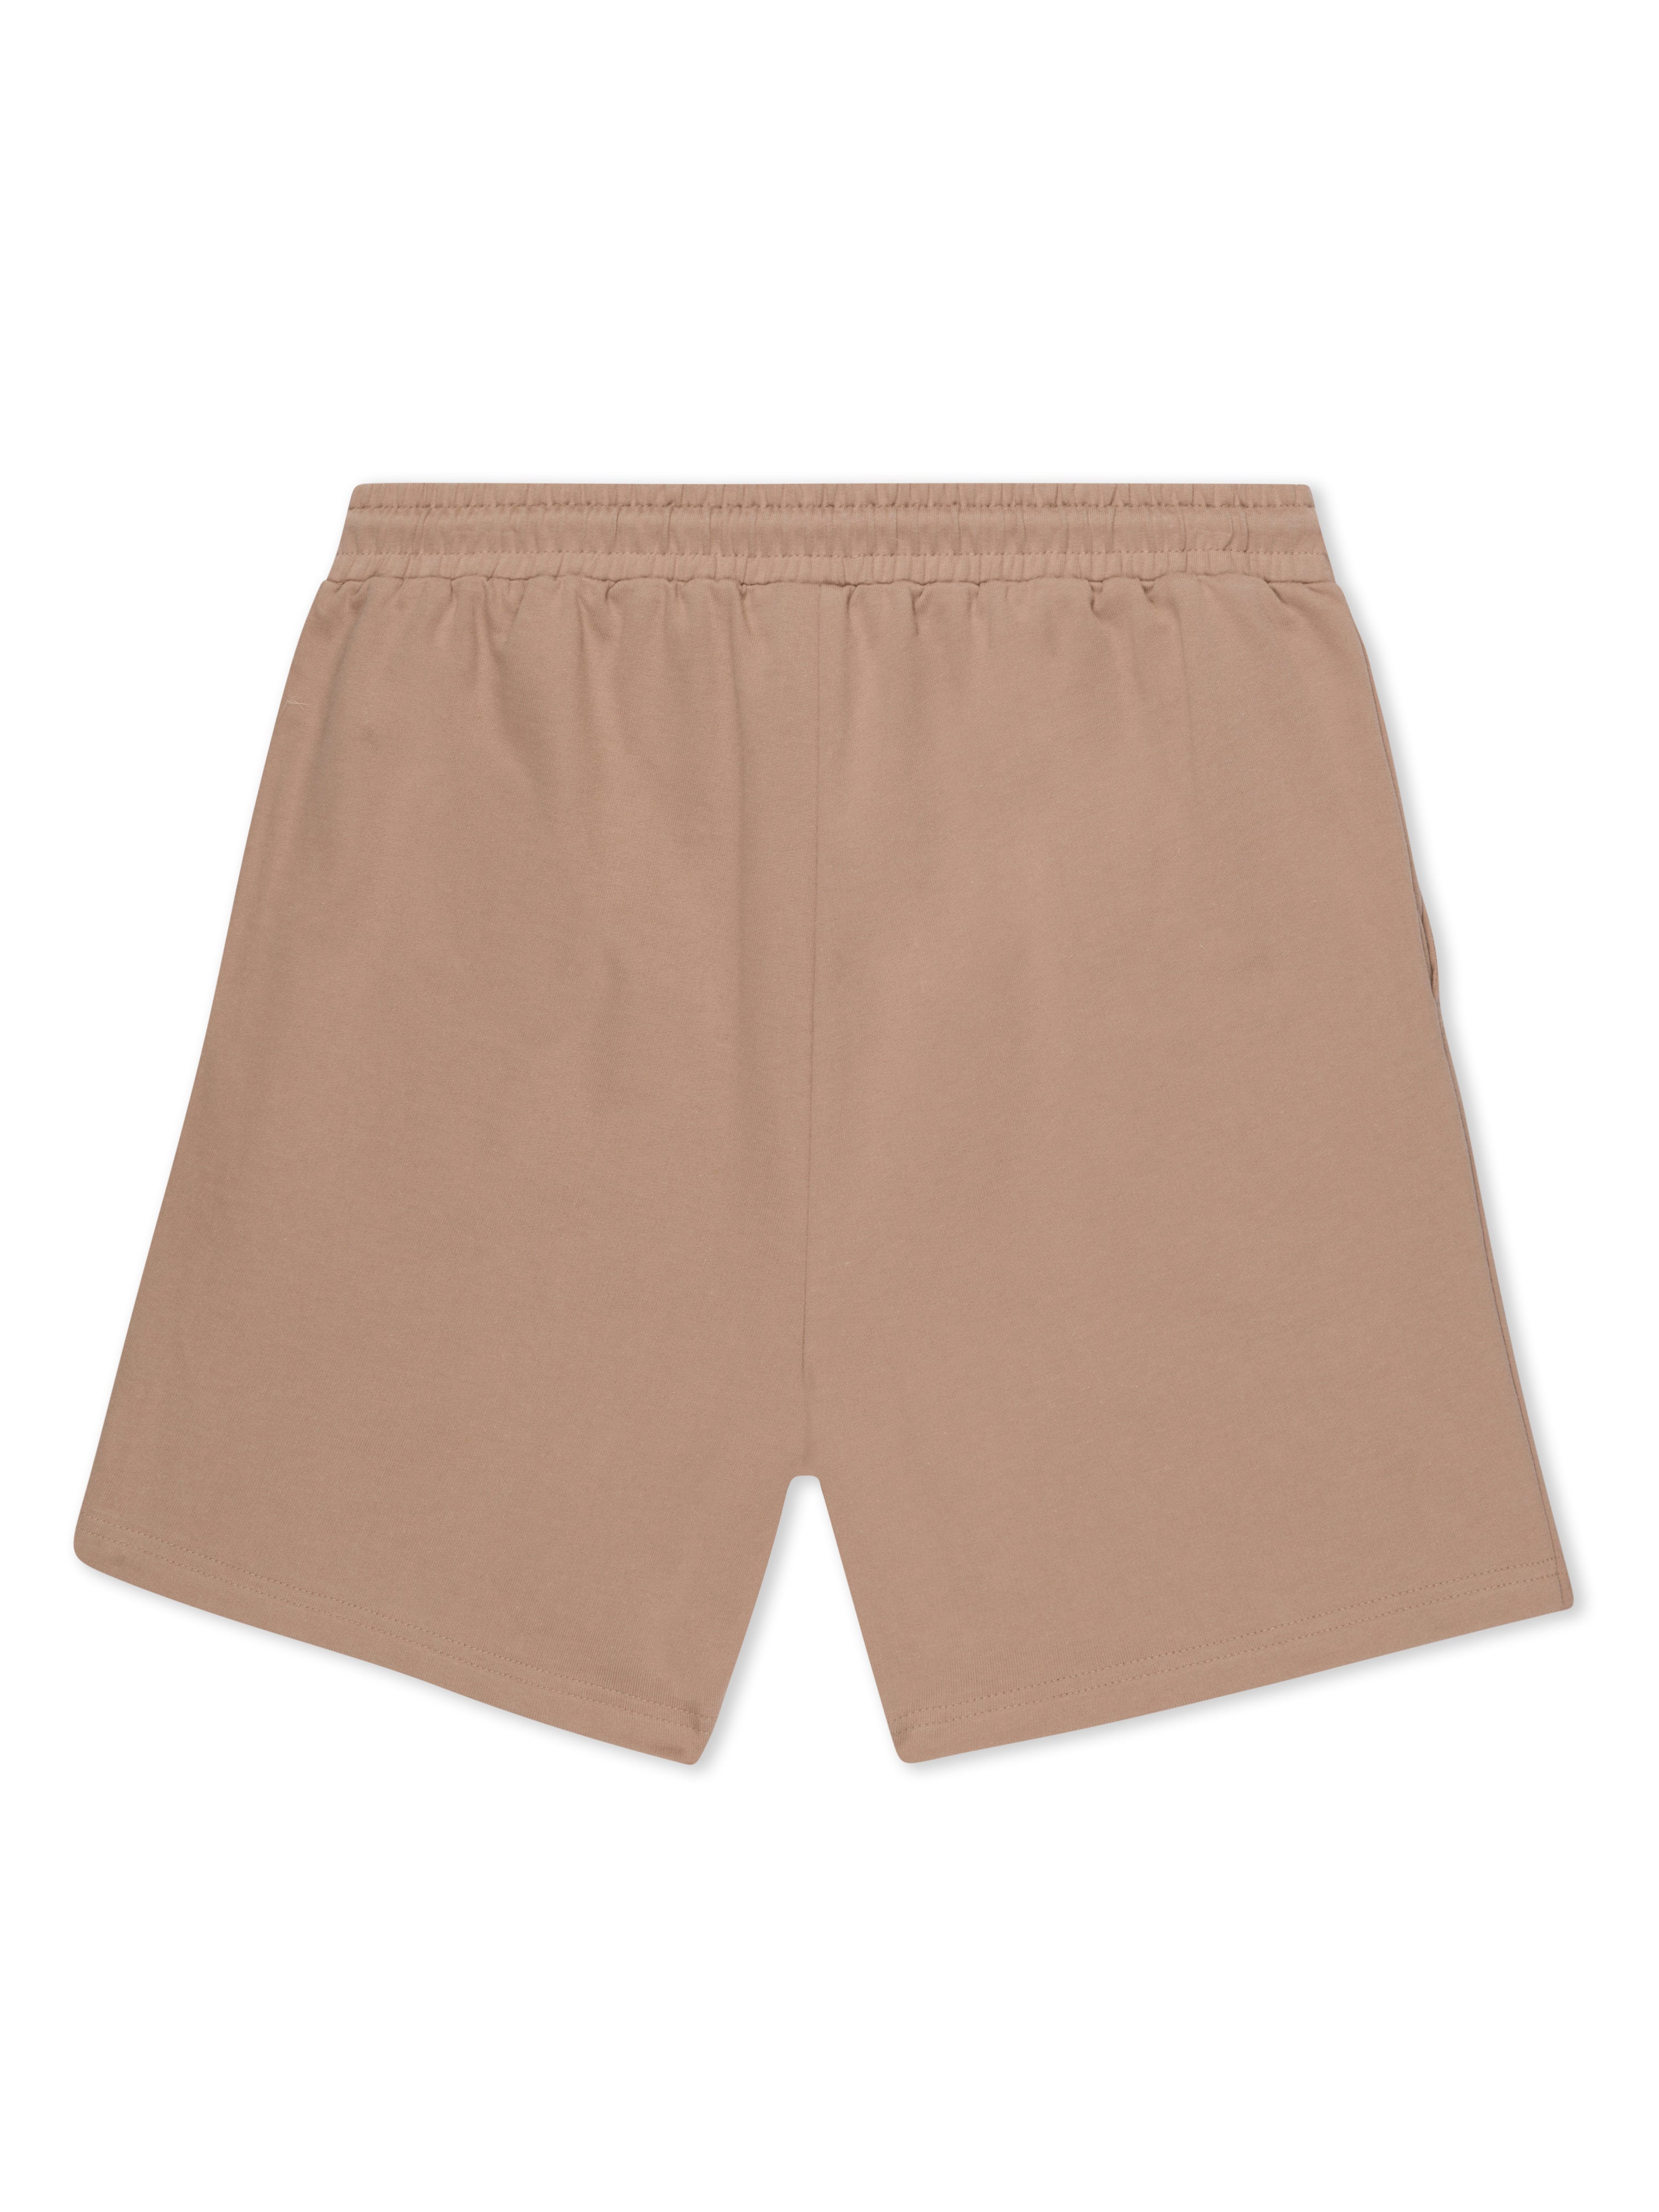 Mens Sand Cotton Gym Shorts | Sol Apparel Up